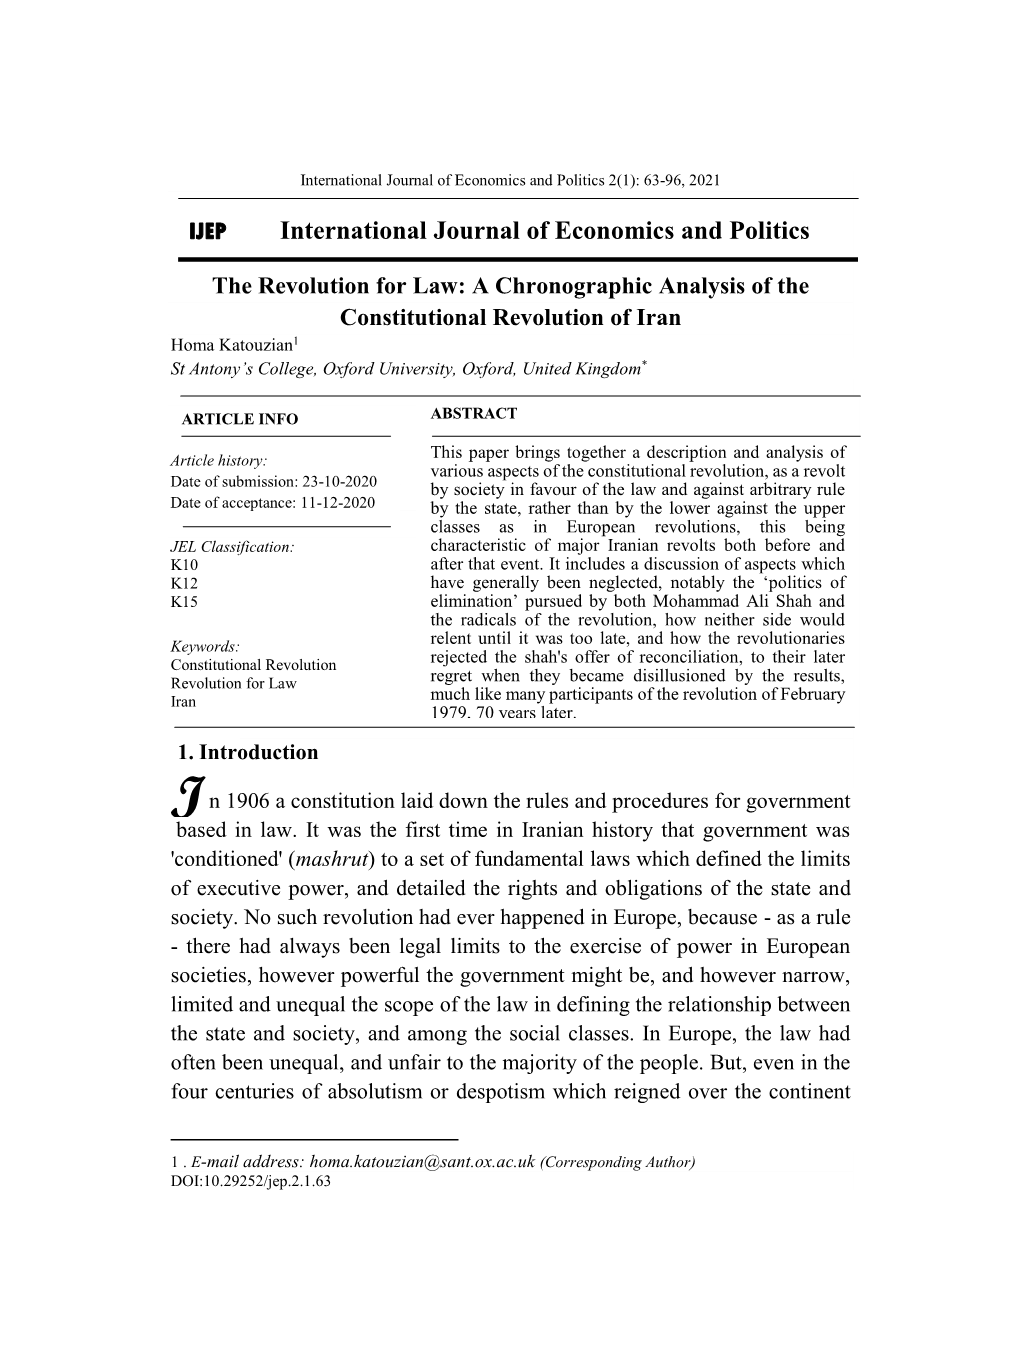 IJEP International Journal of Economics and Politics